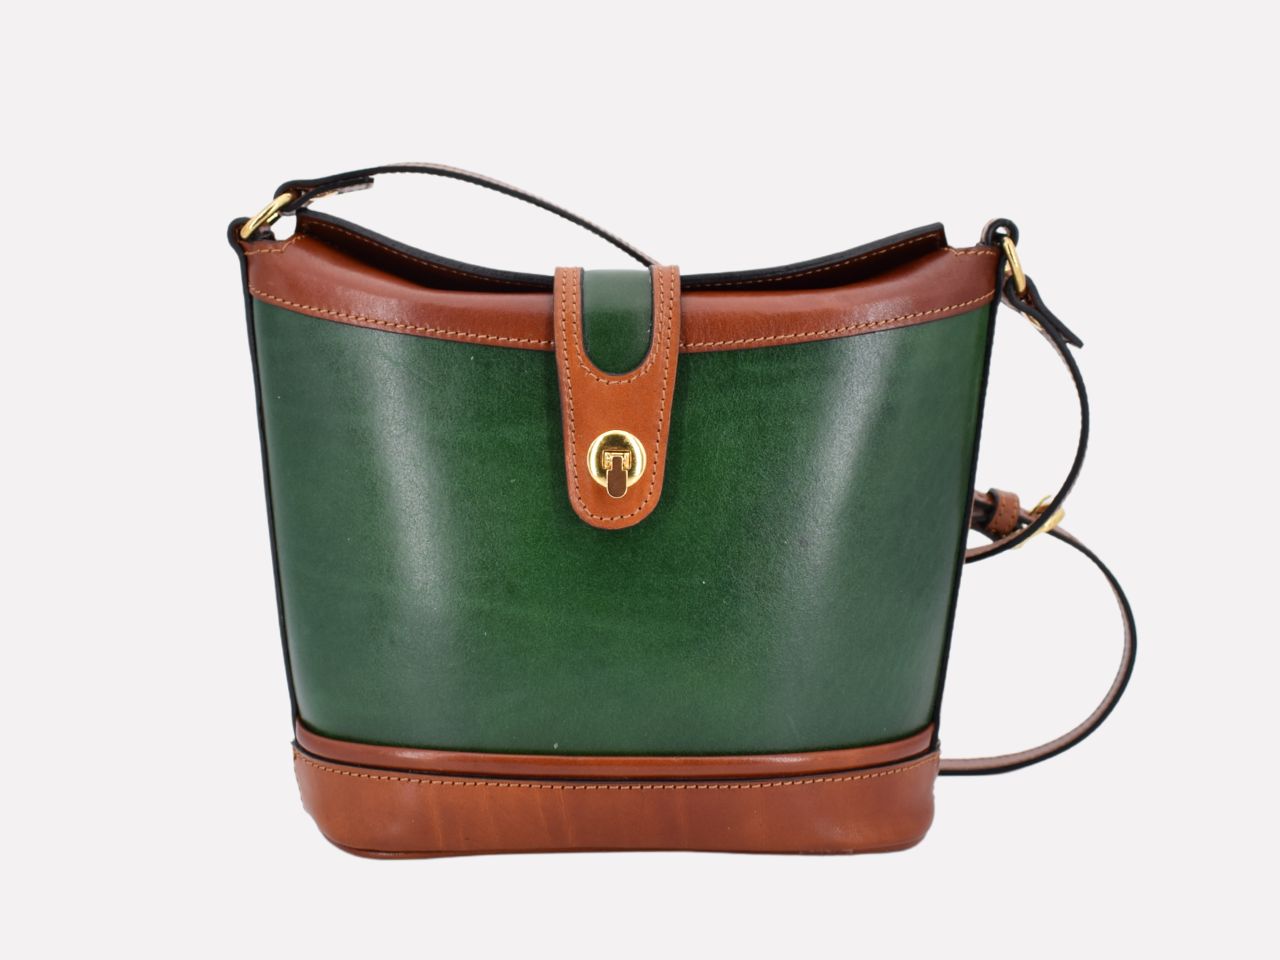 Aura, Italian leather "bucket" handbag designed and handcrafted in Rome by Riccardo Mancini